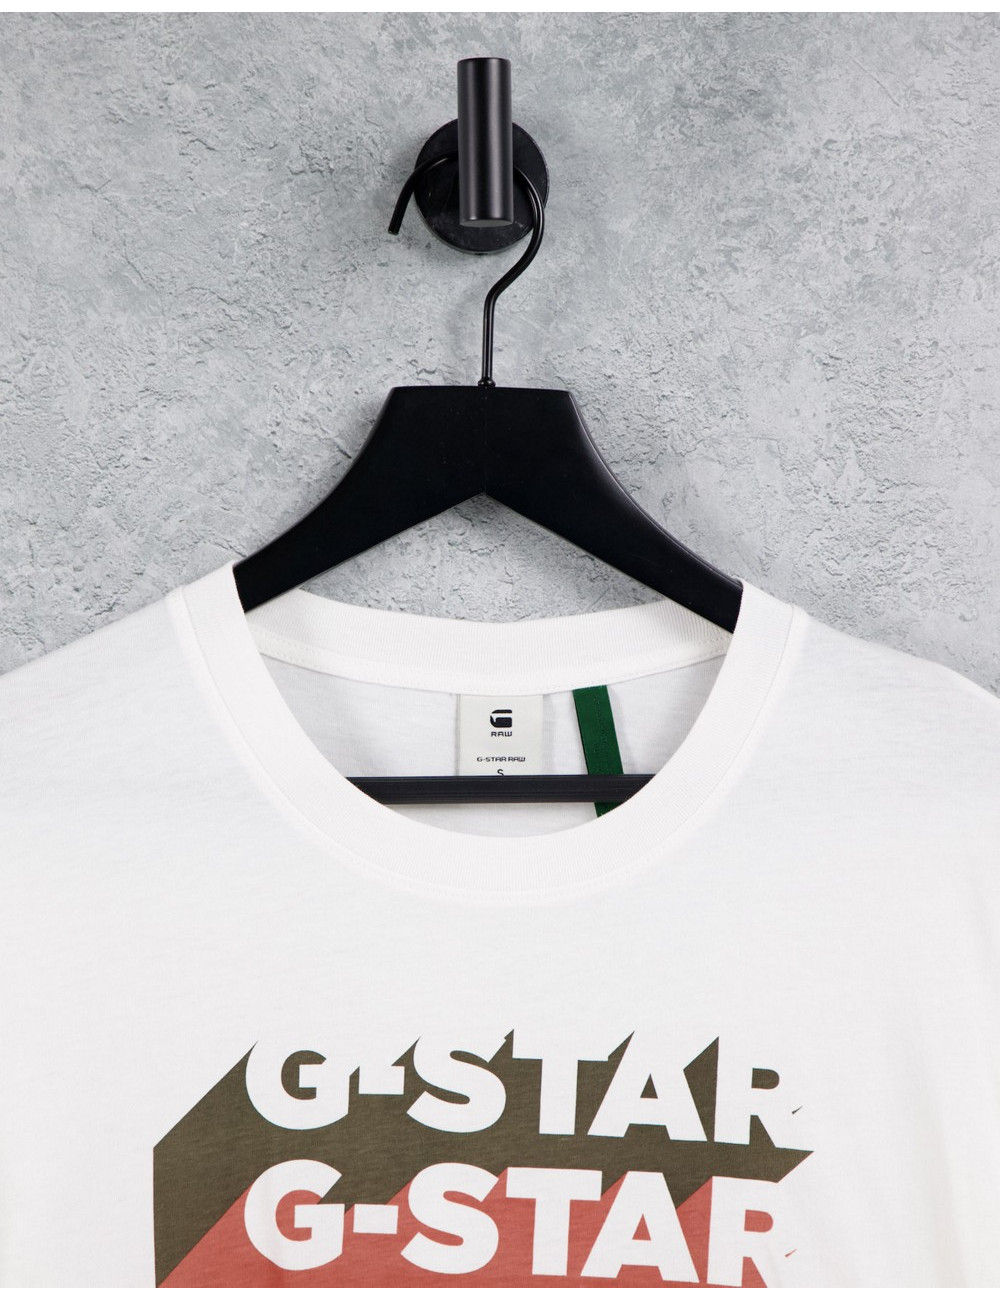 G-Star graphic logo t-shirt...